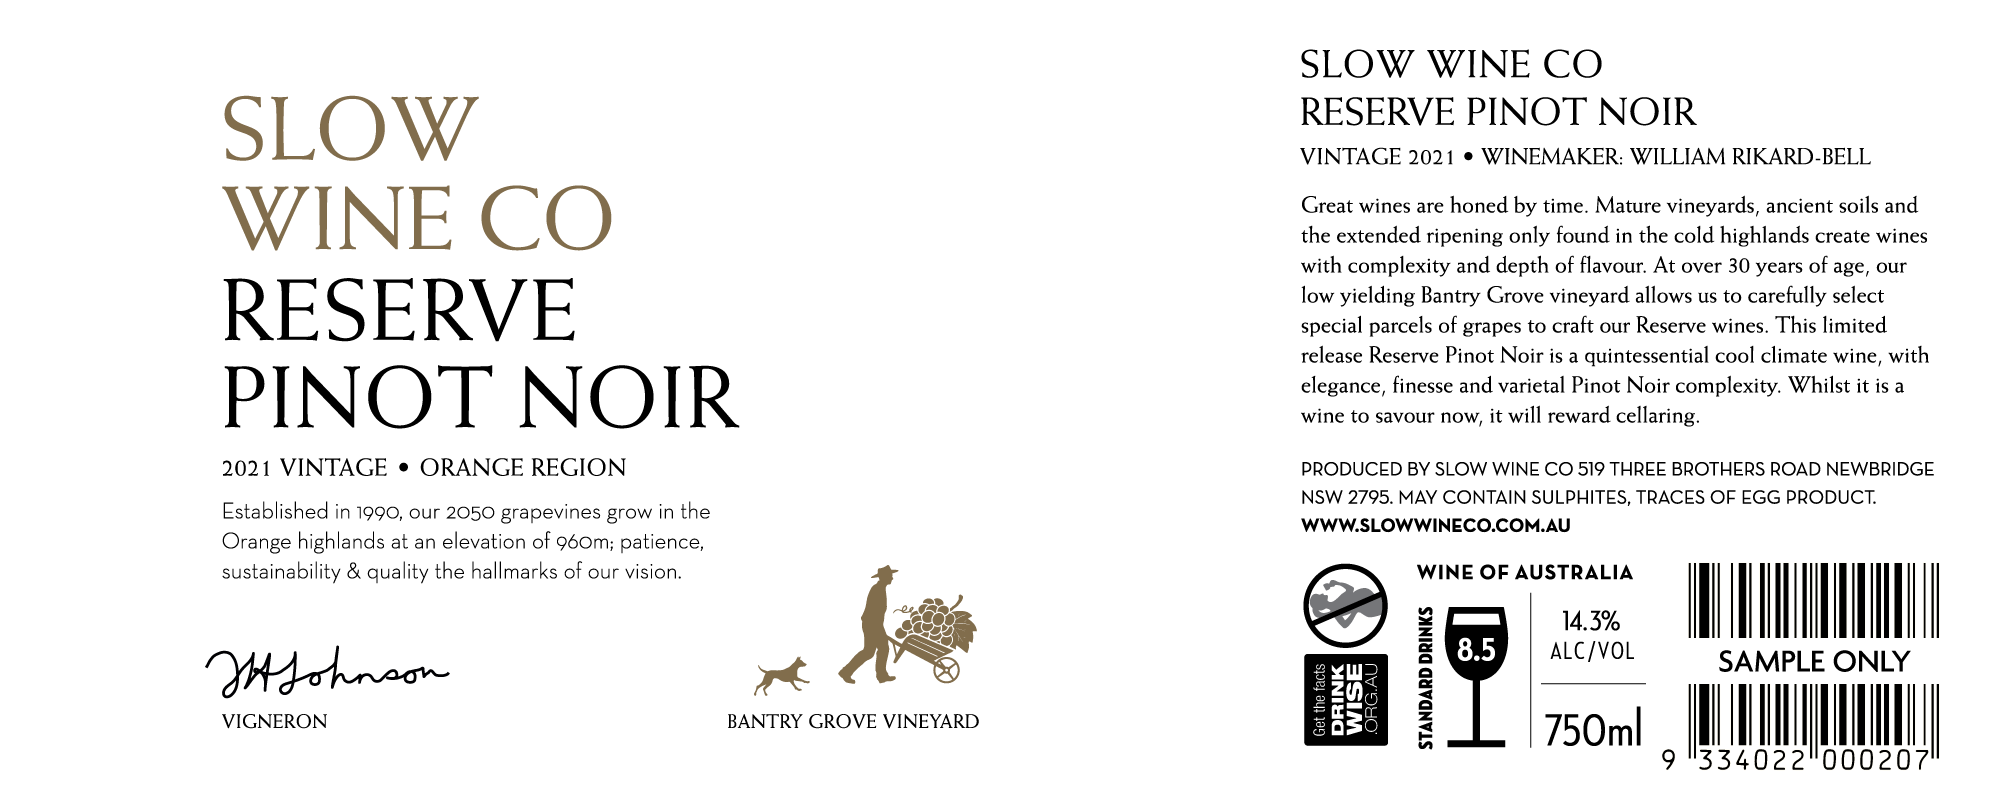 Slow Wine Co Reserve PinotNoir 2021 Label